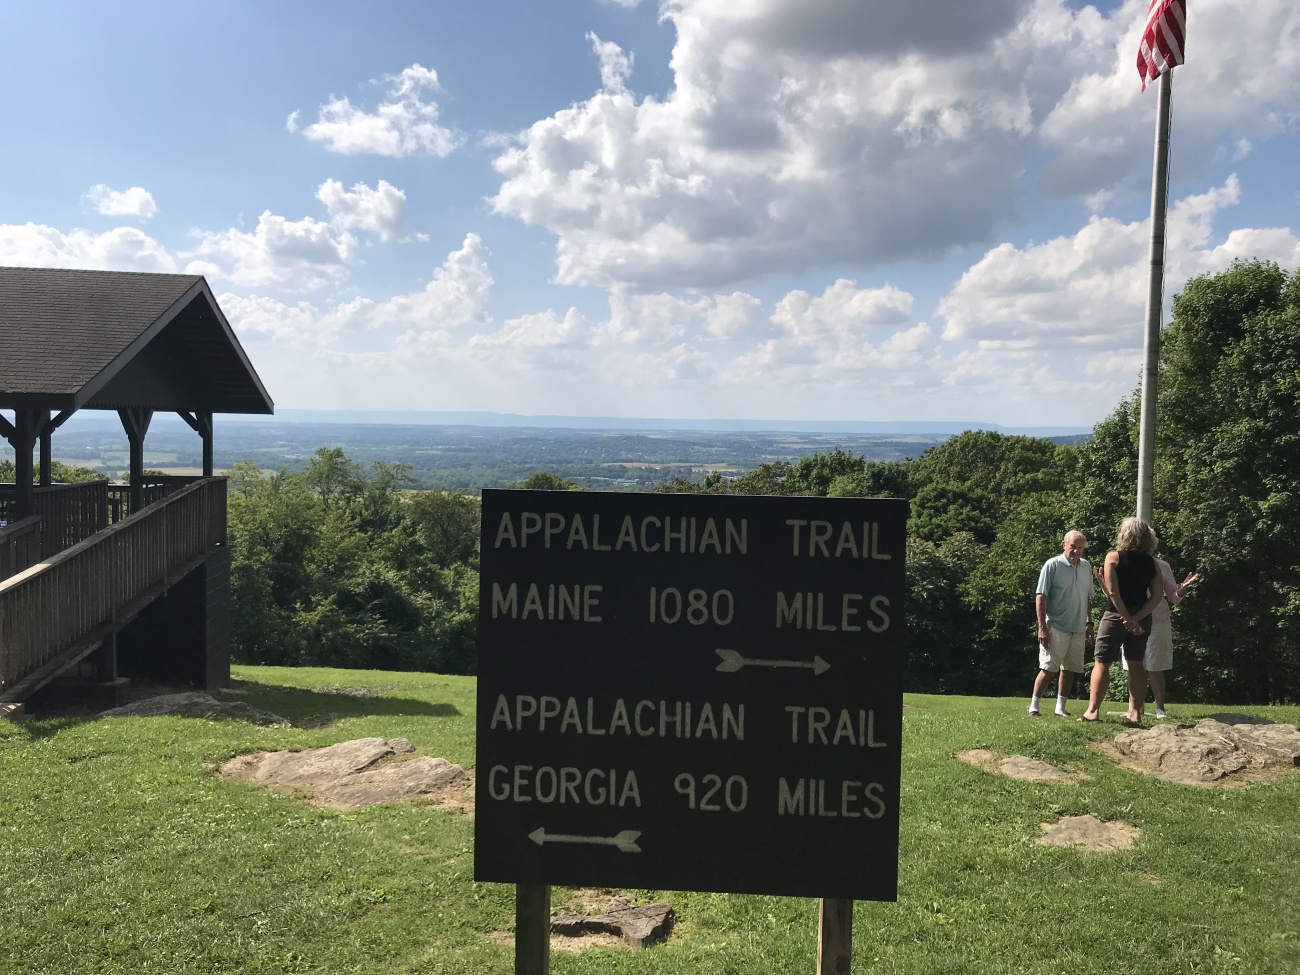 Is the Appalachian Trail near here?